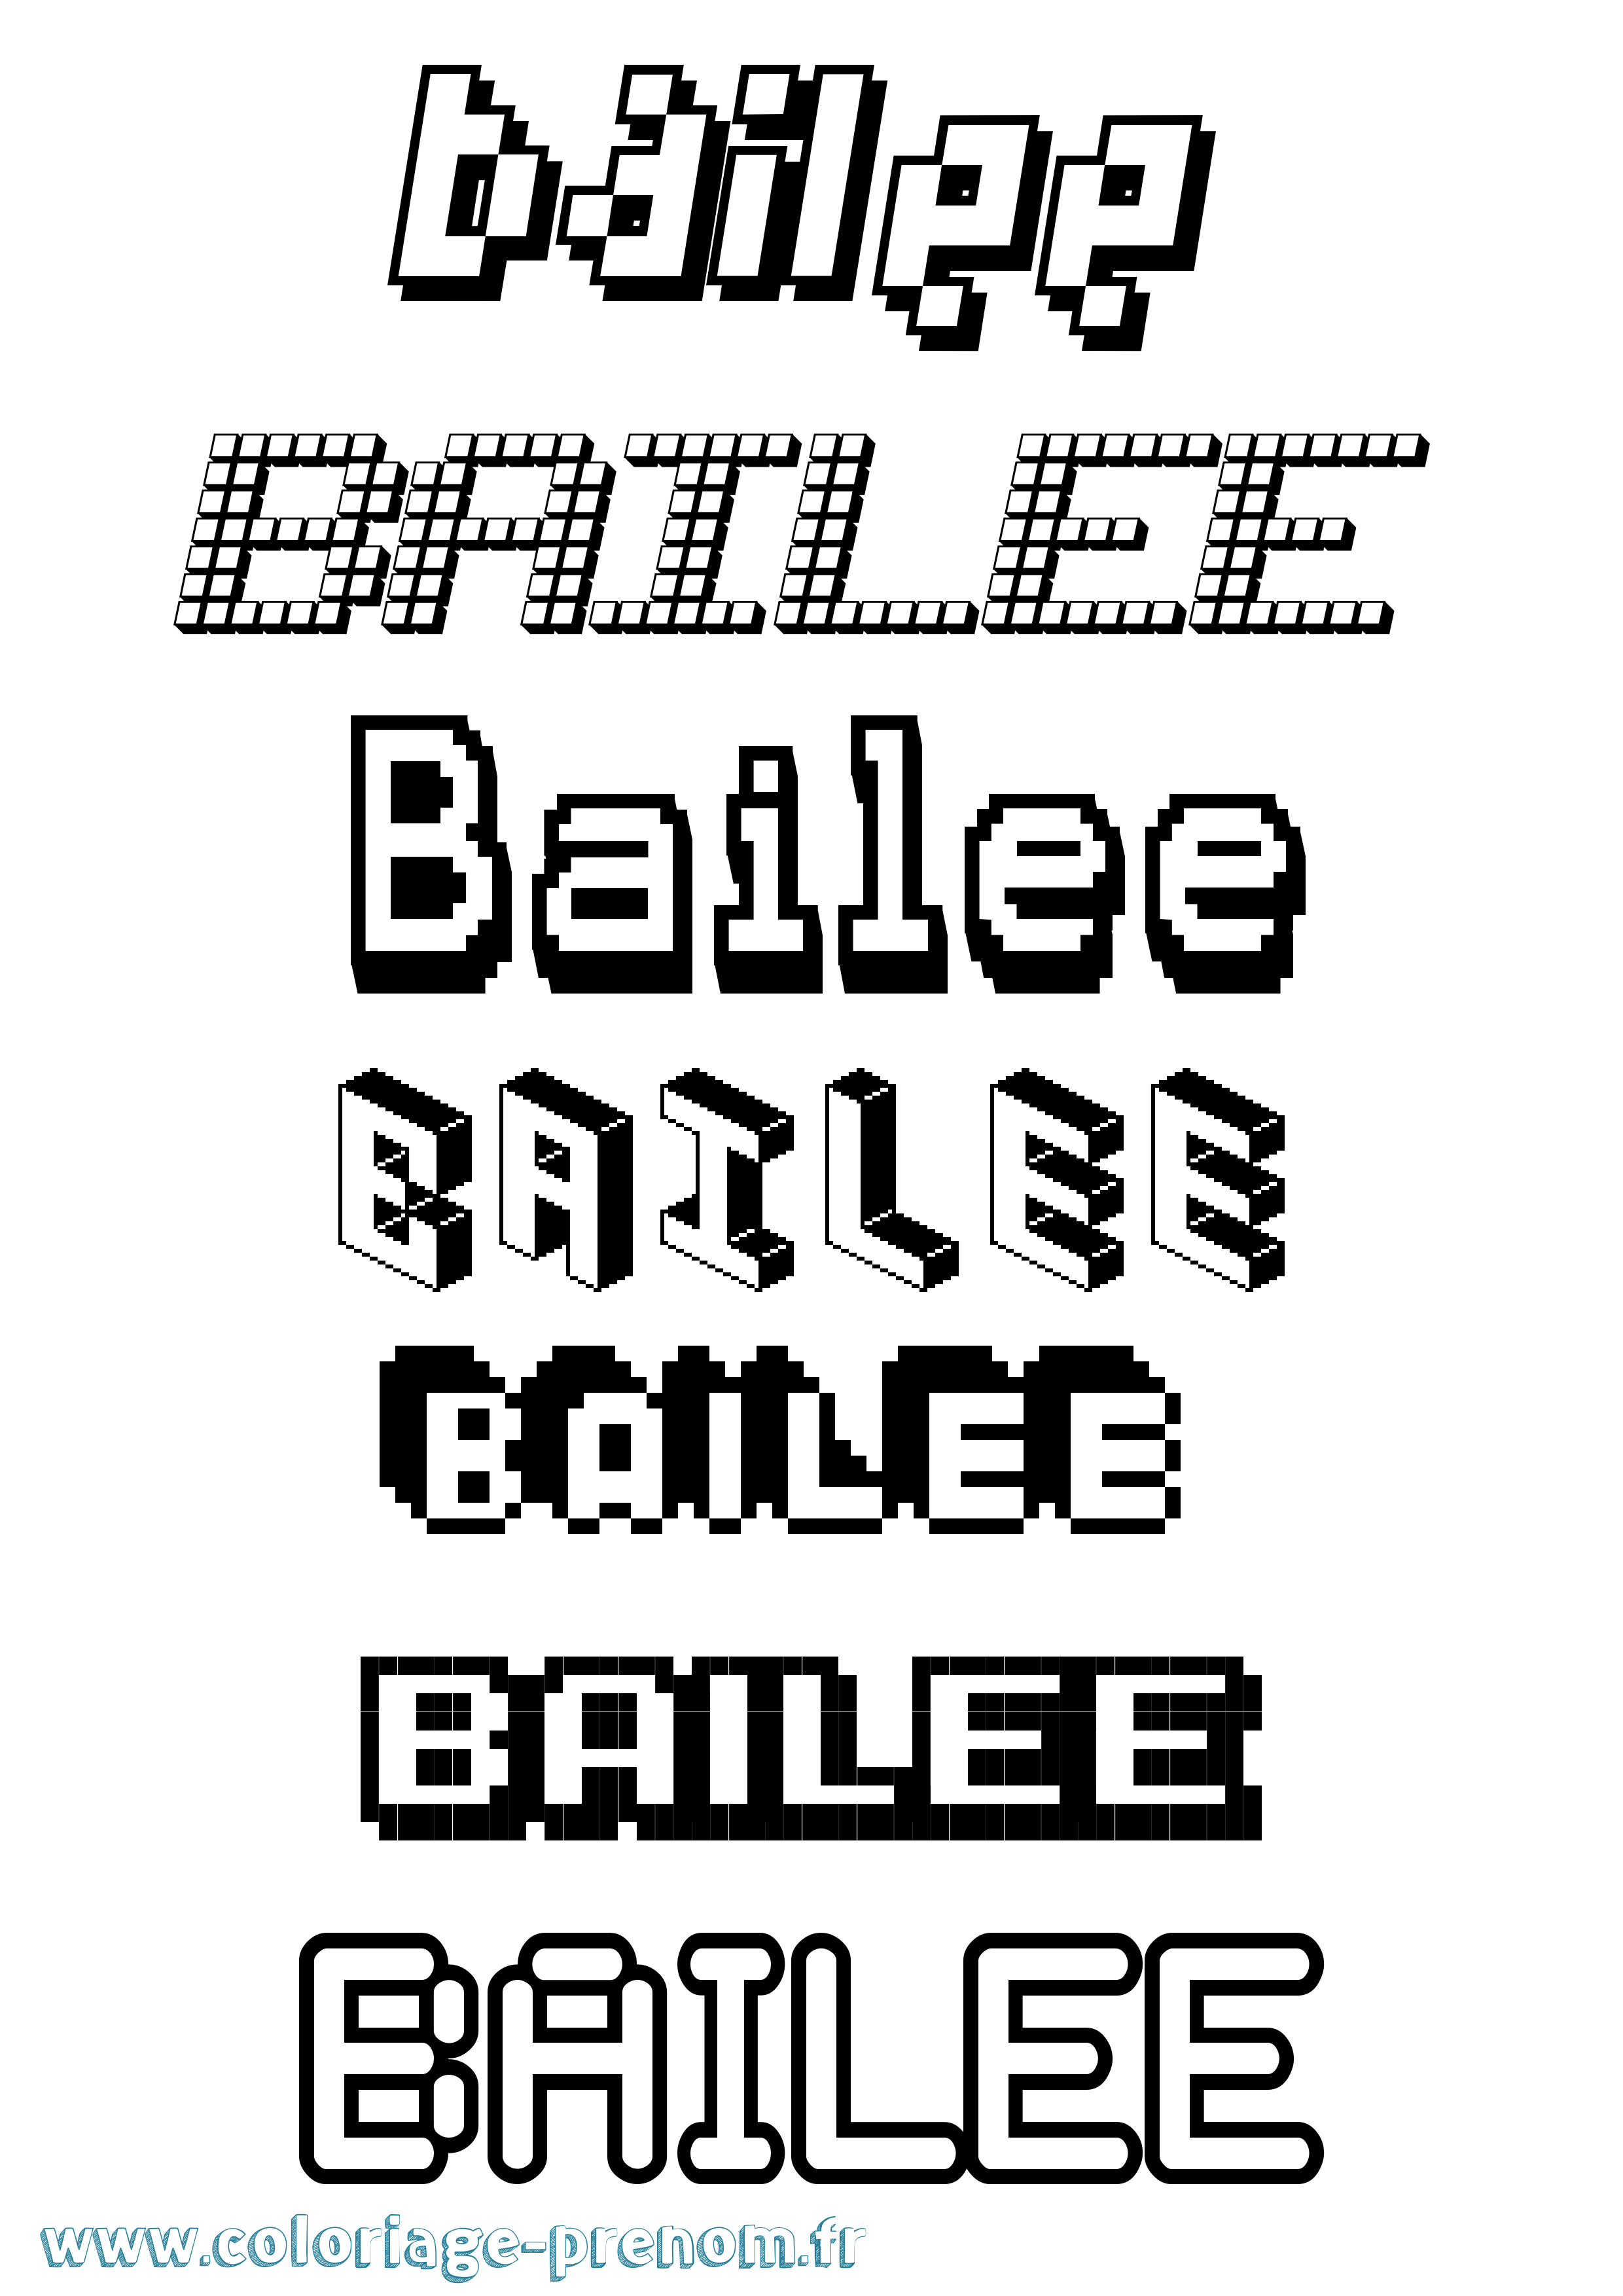 Coloriage prénom Bailee Pixel